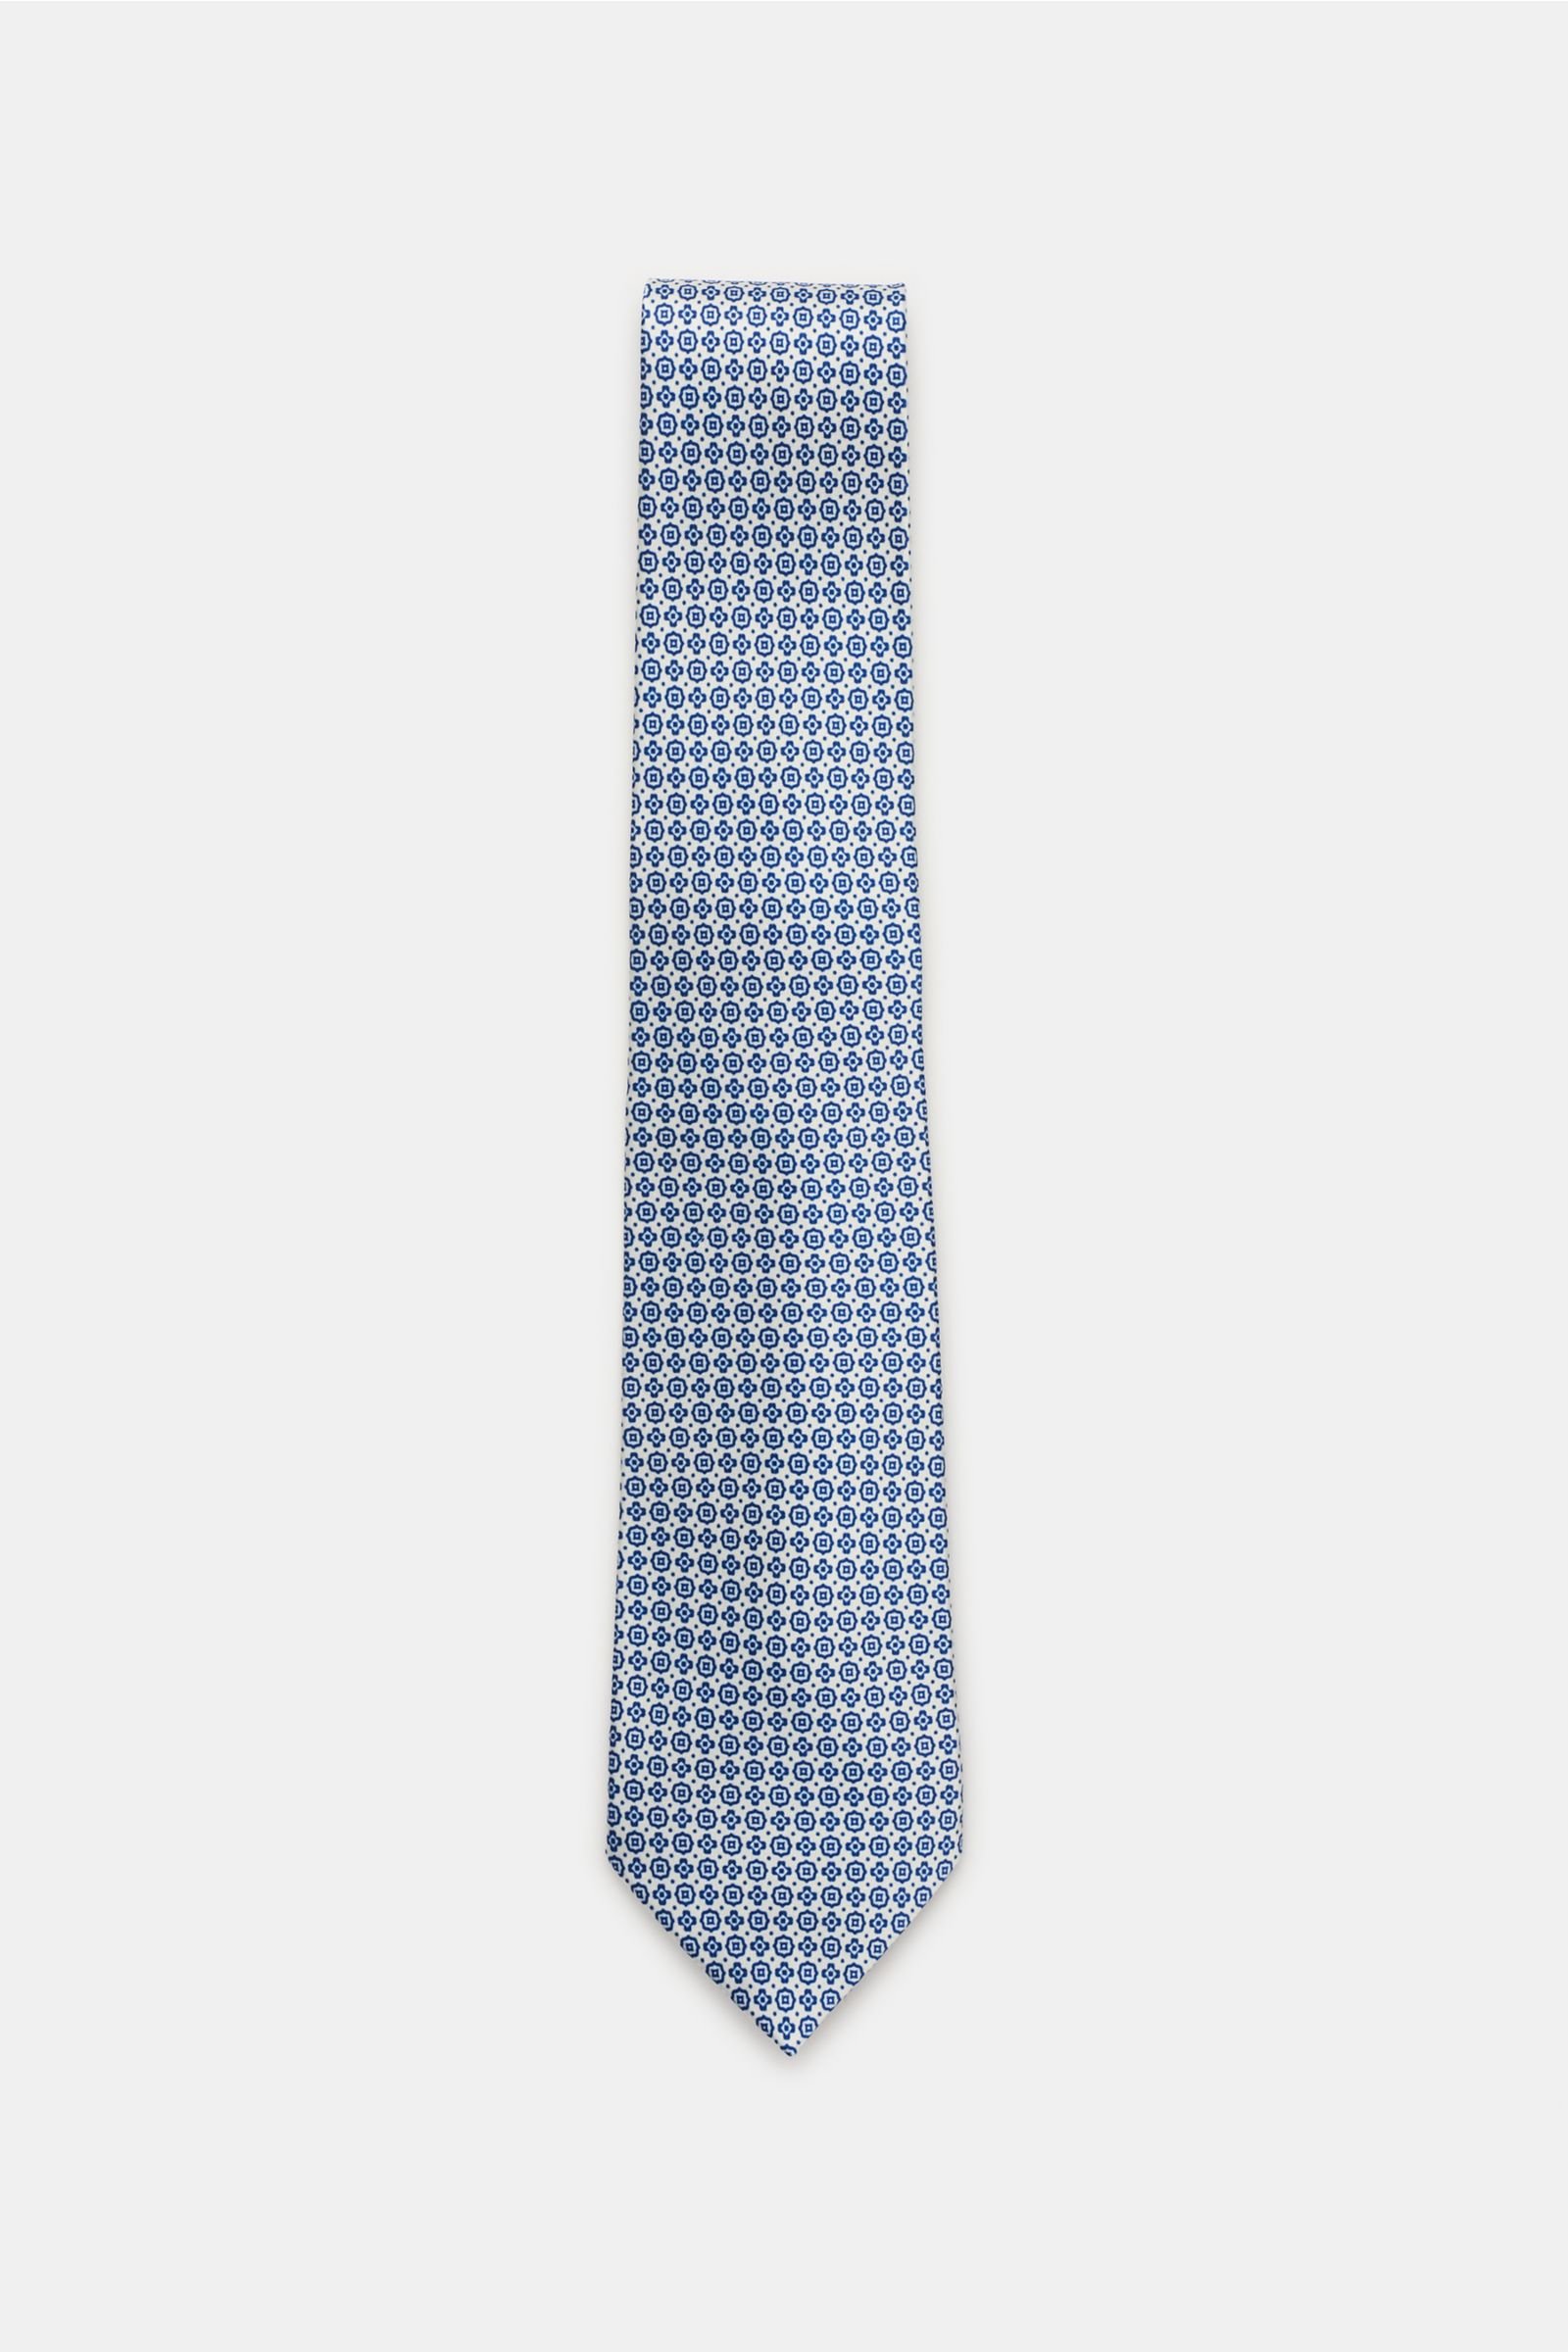 Silk tie white/navy patterned